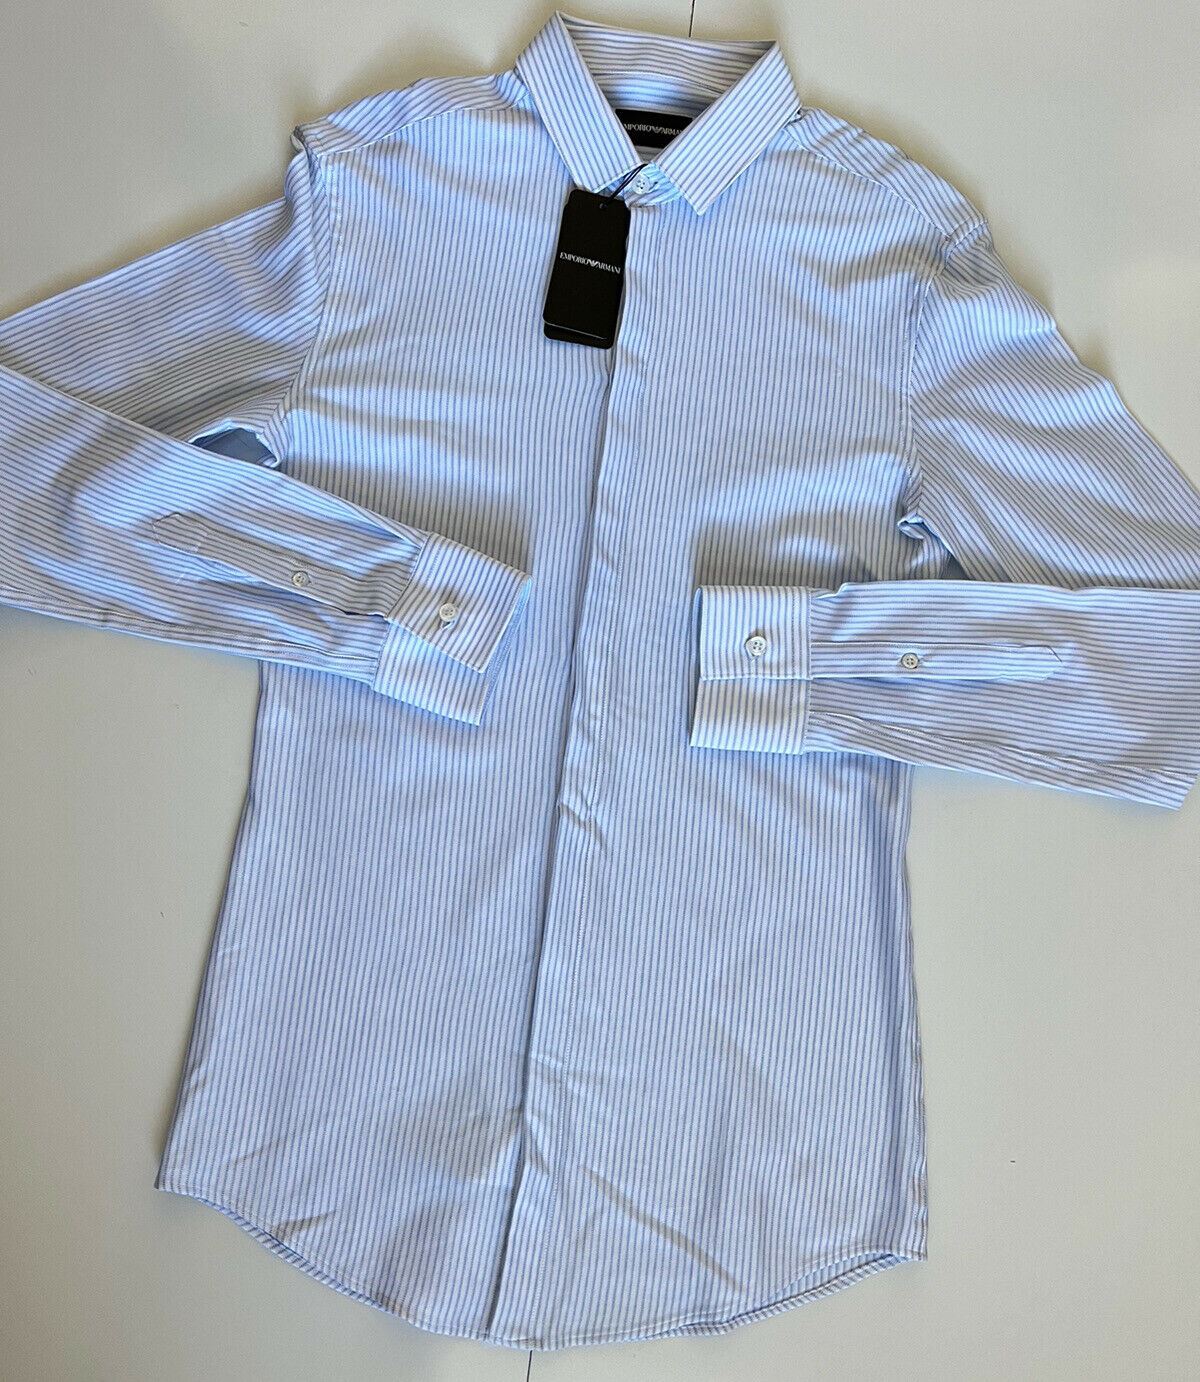 NWT $445 Emporio Armani Классическая рубашка с итальянским воротником, размер 38/15 51CC2T